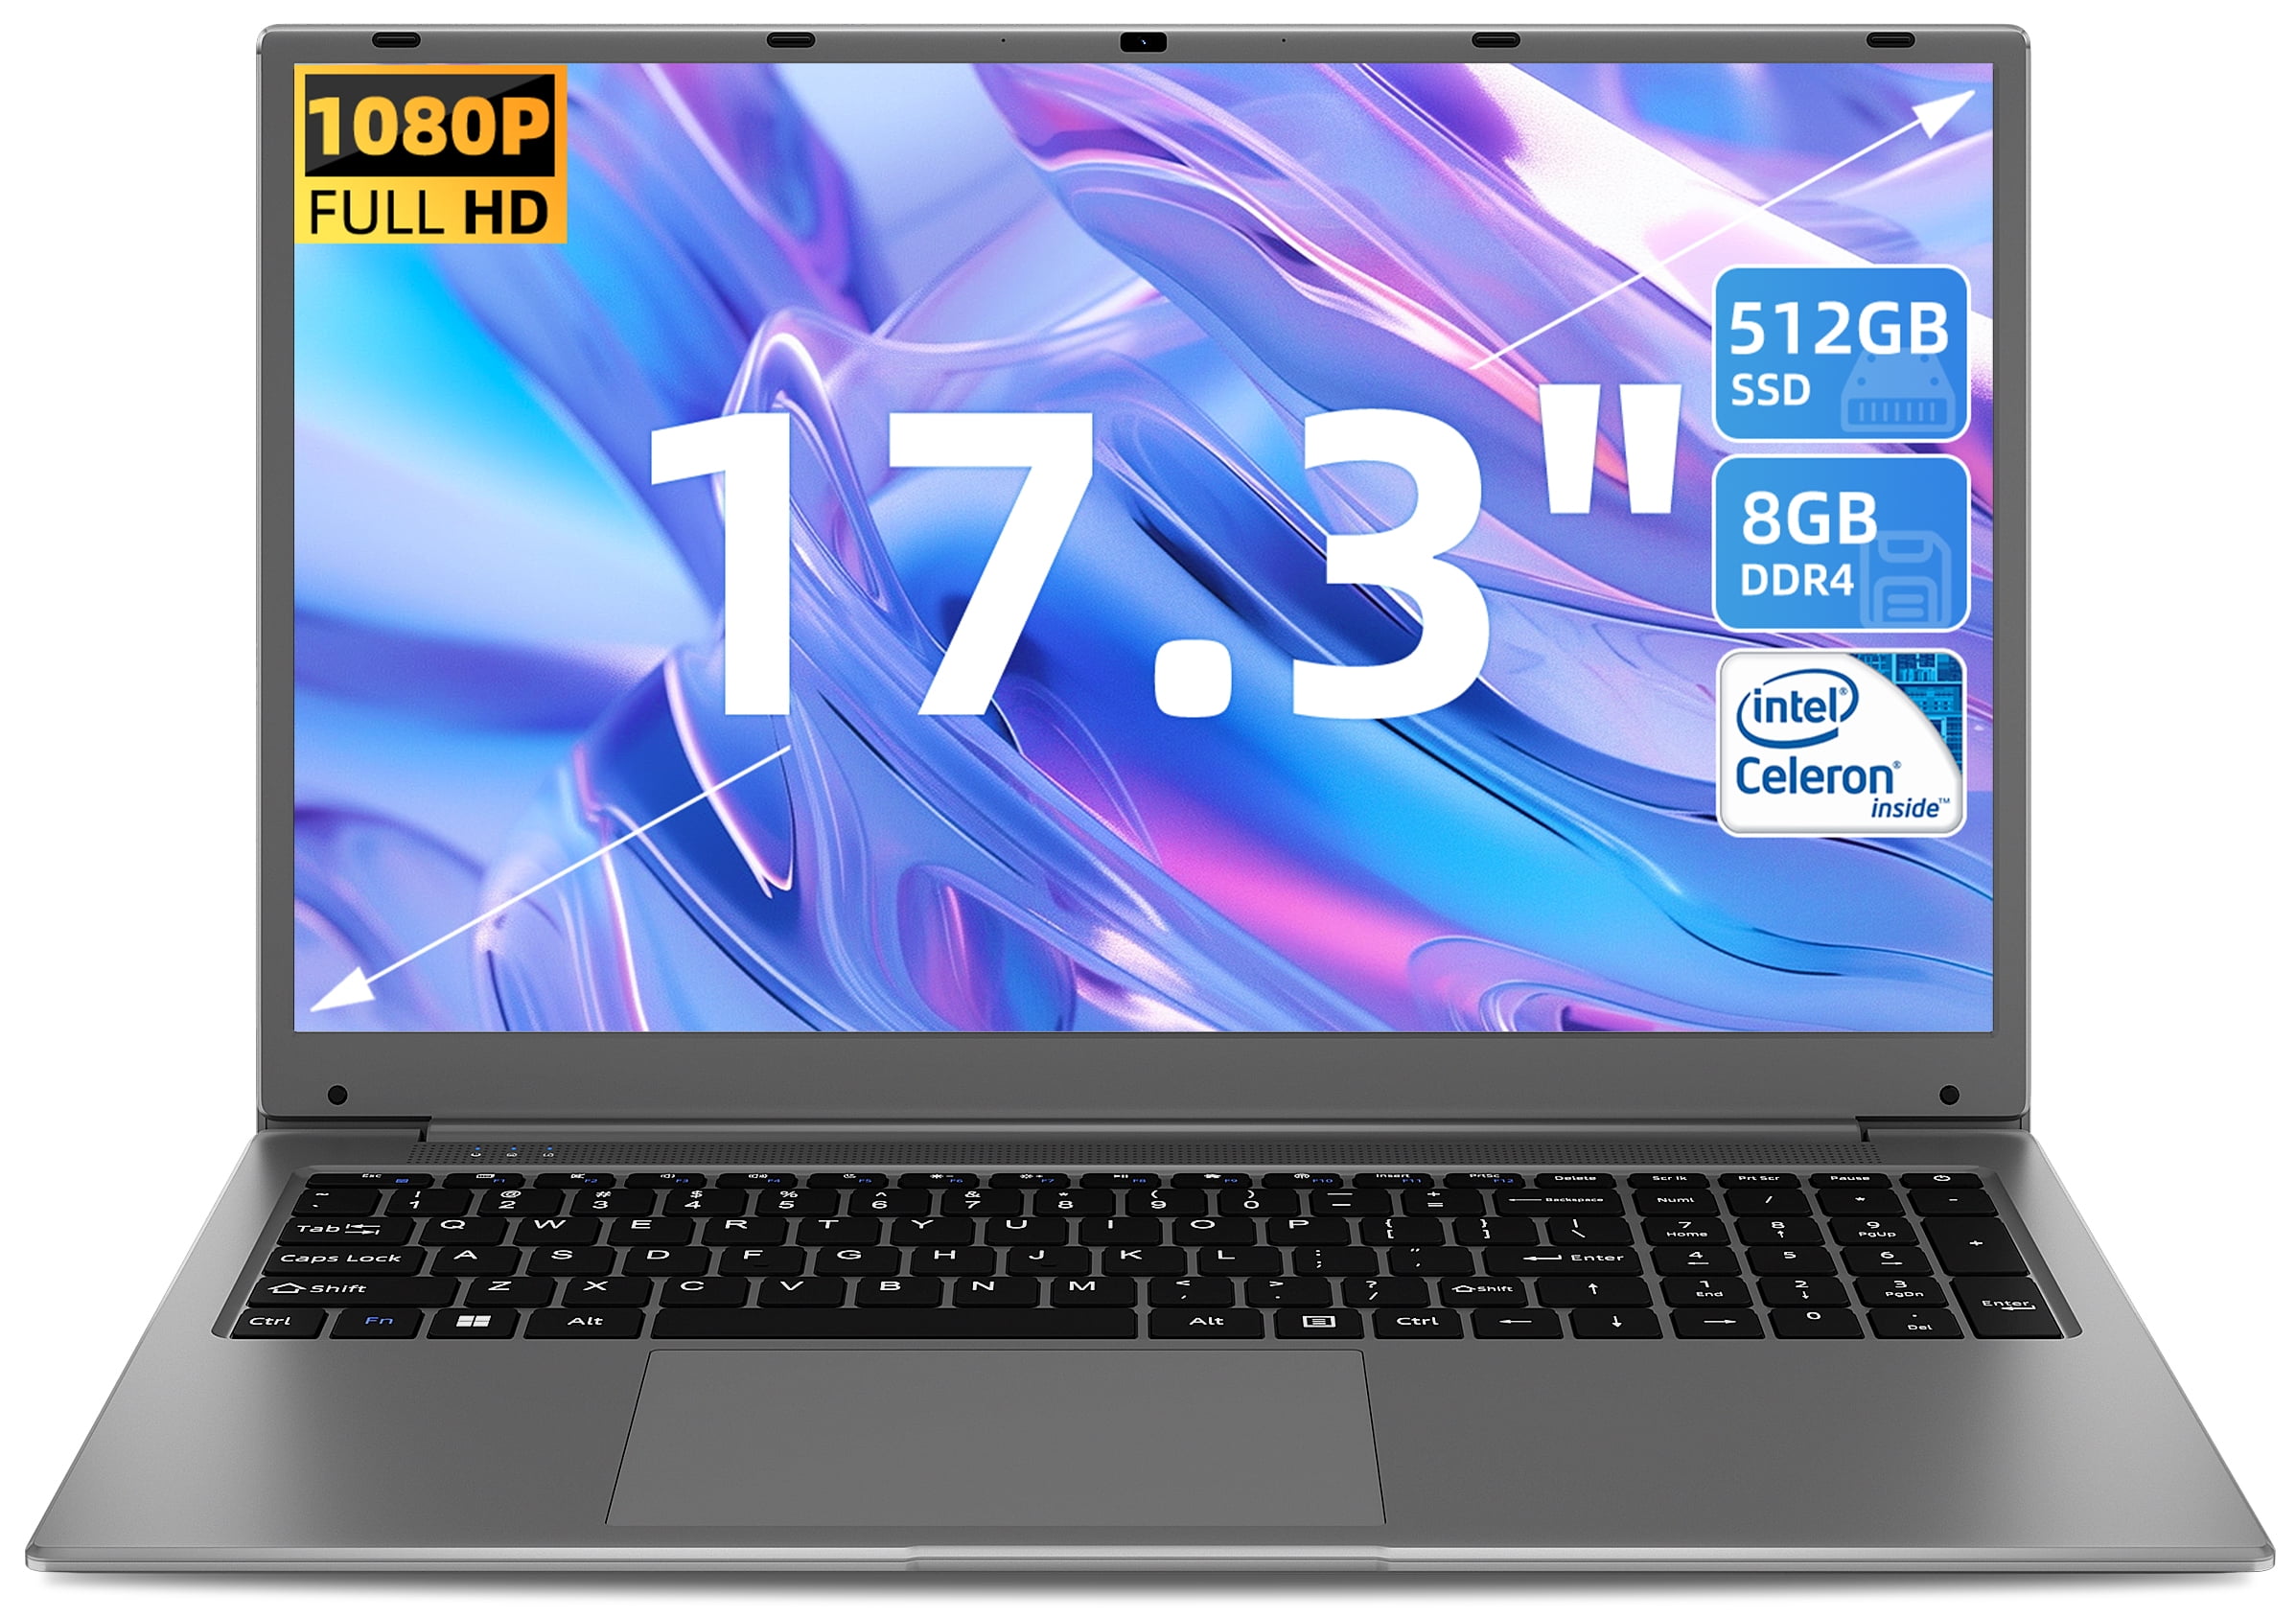 SGIN 17.3 inch Laptop 8GB RAM 512GB SSD IPS Full HD Display Quad Core 2.9  GHz